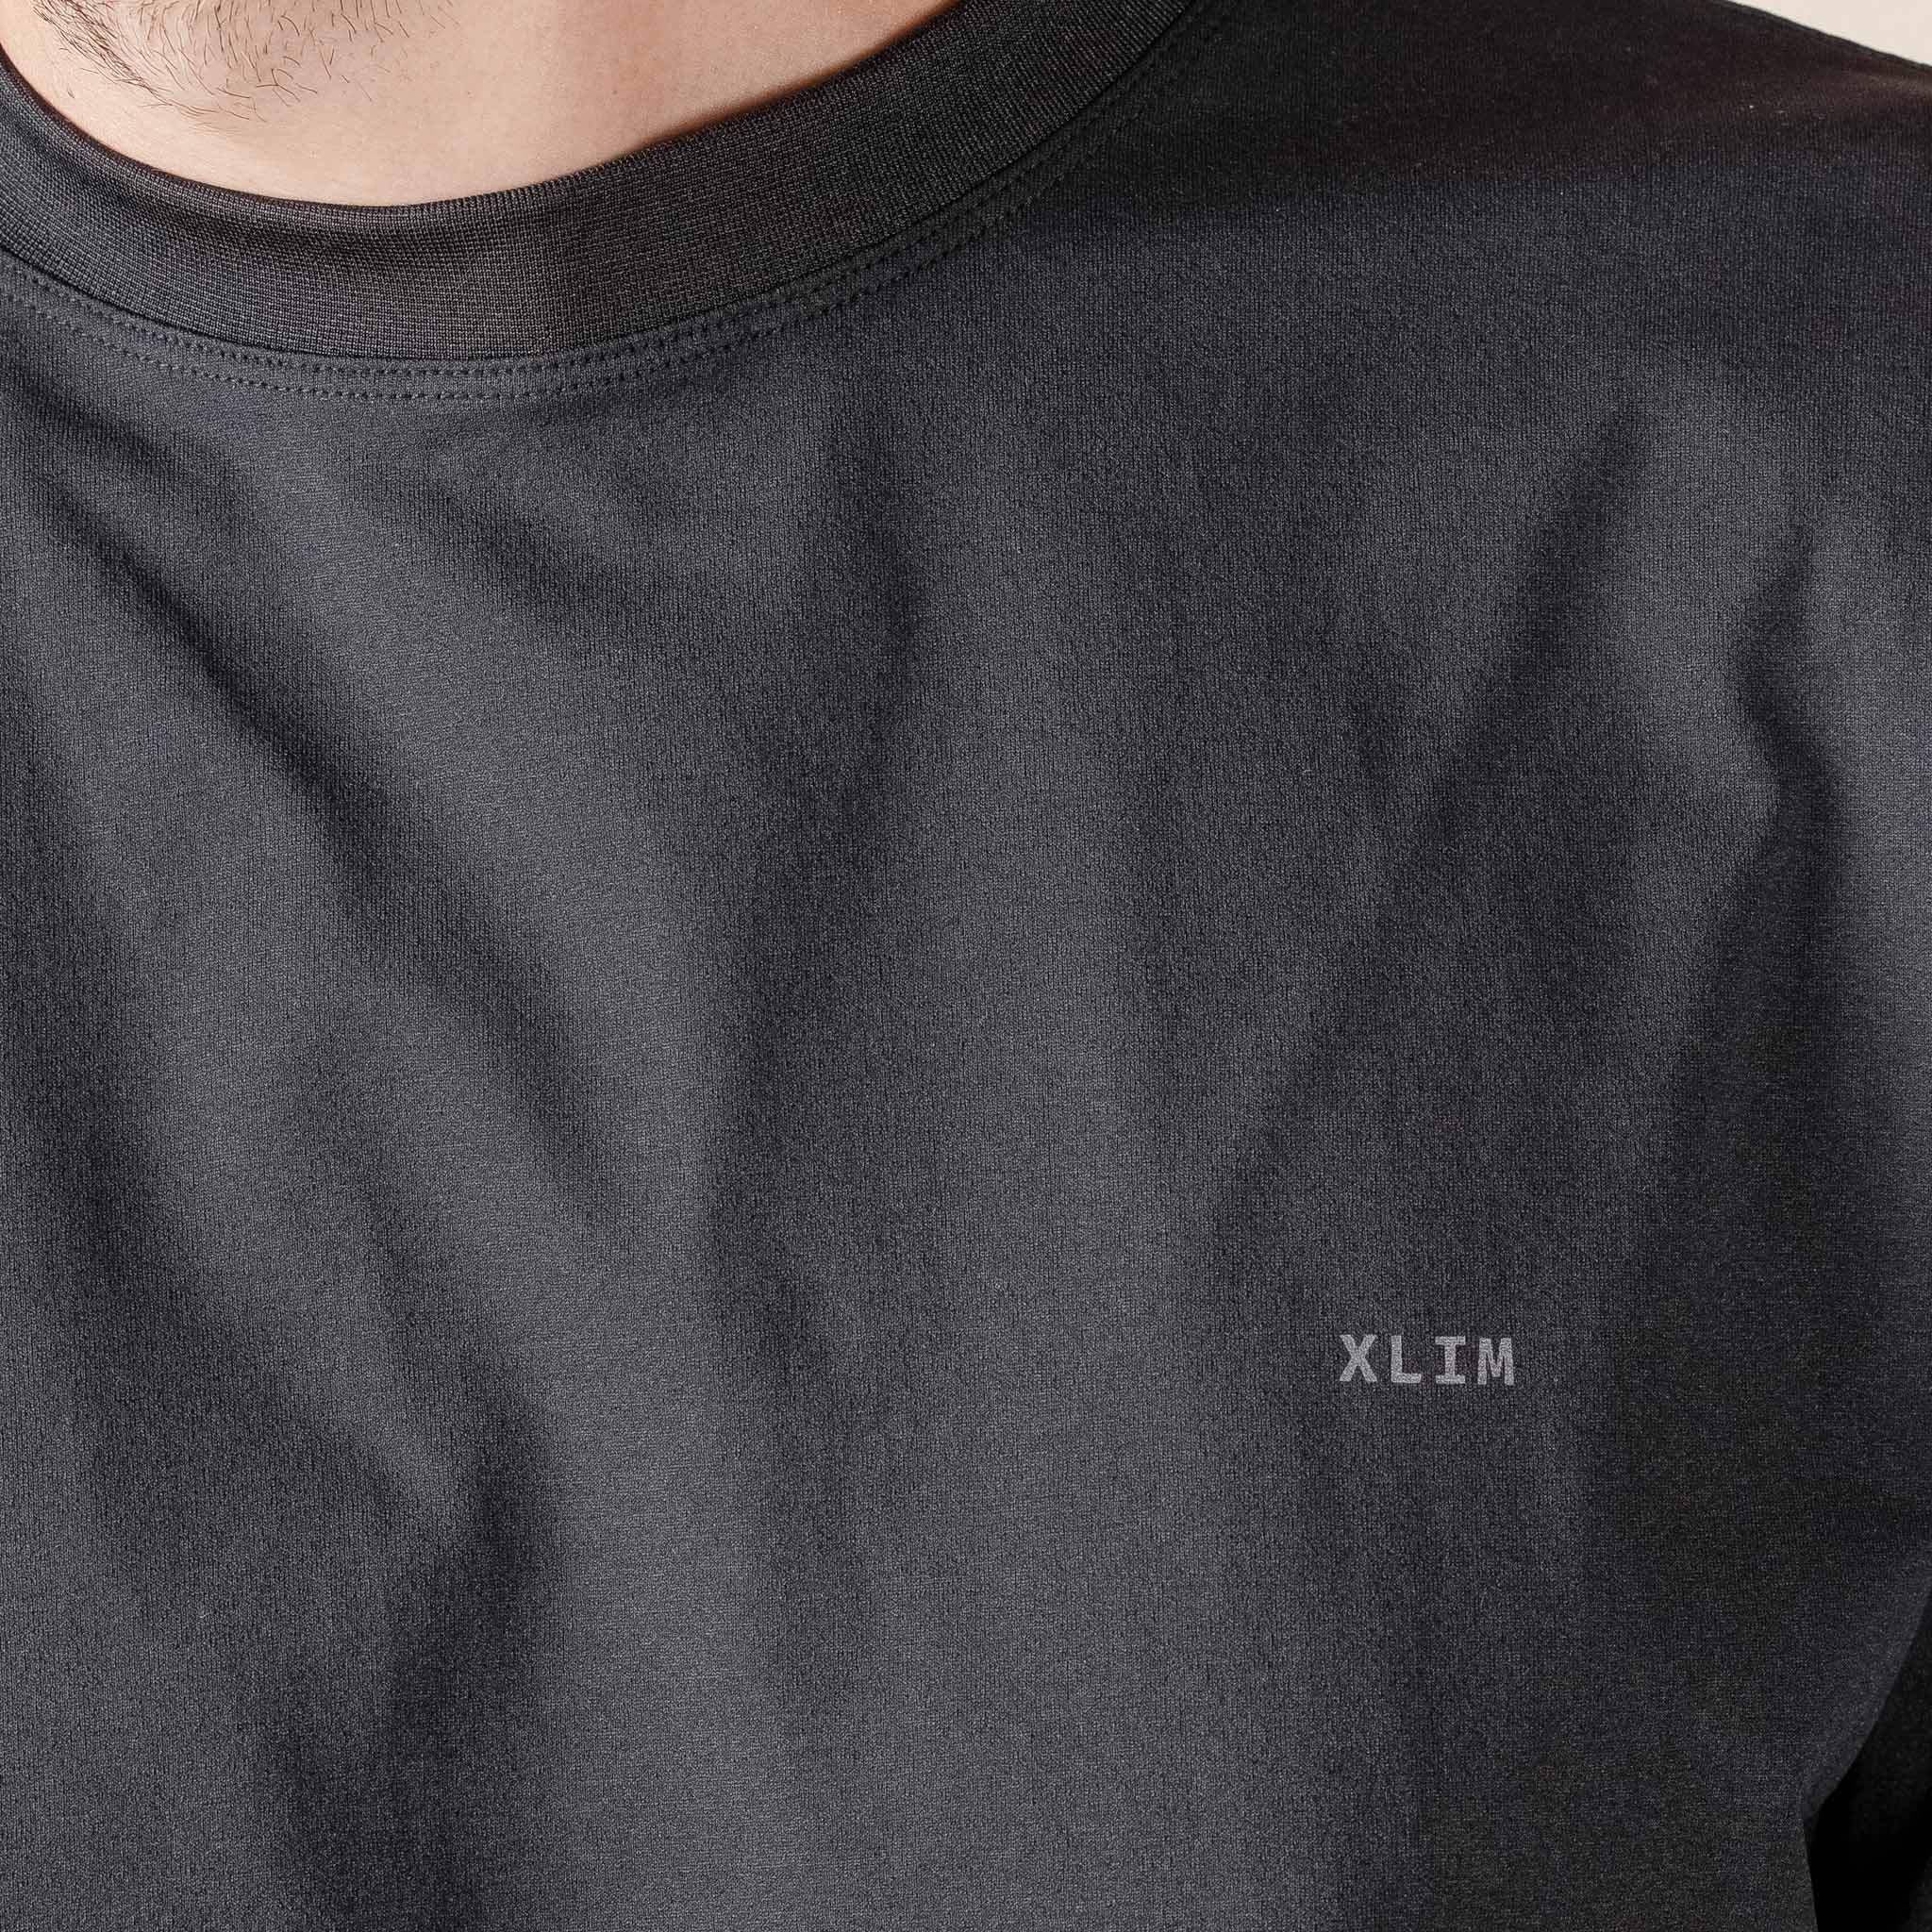 XLIM - EP.4 01 Long Sleeve Top - Black "xlim stockists" "xlim pants" "xlim Korea" "xlim uk"